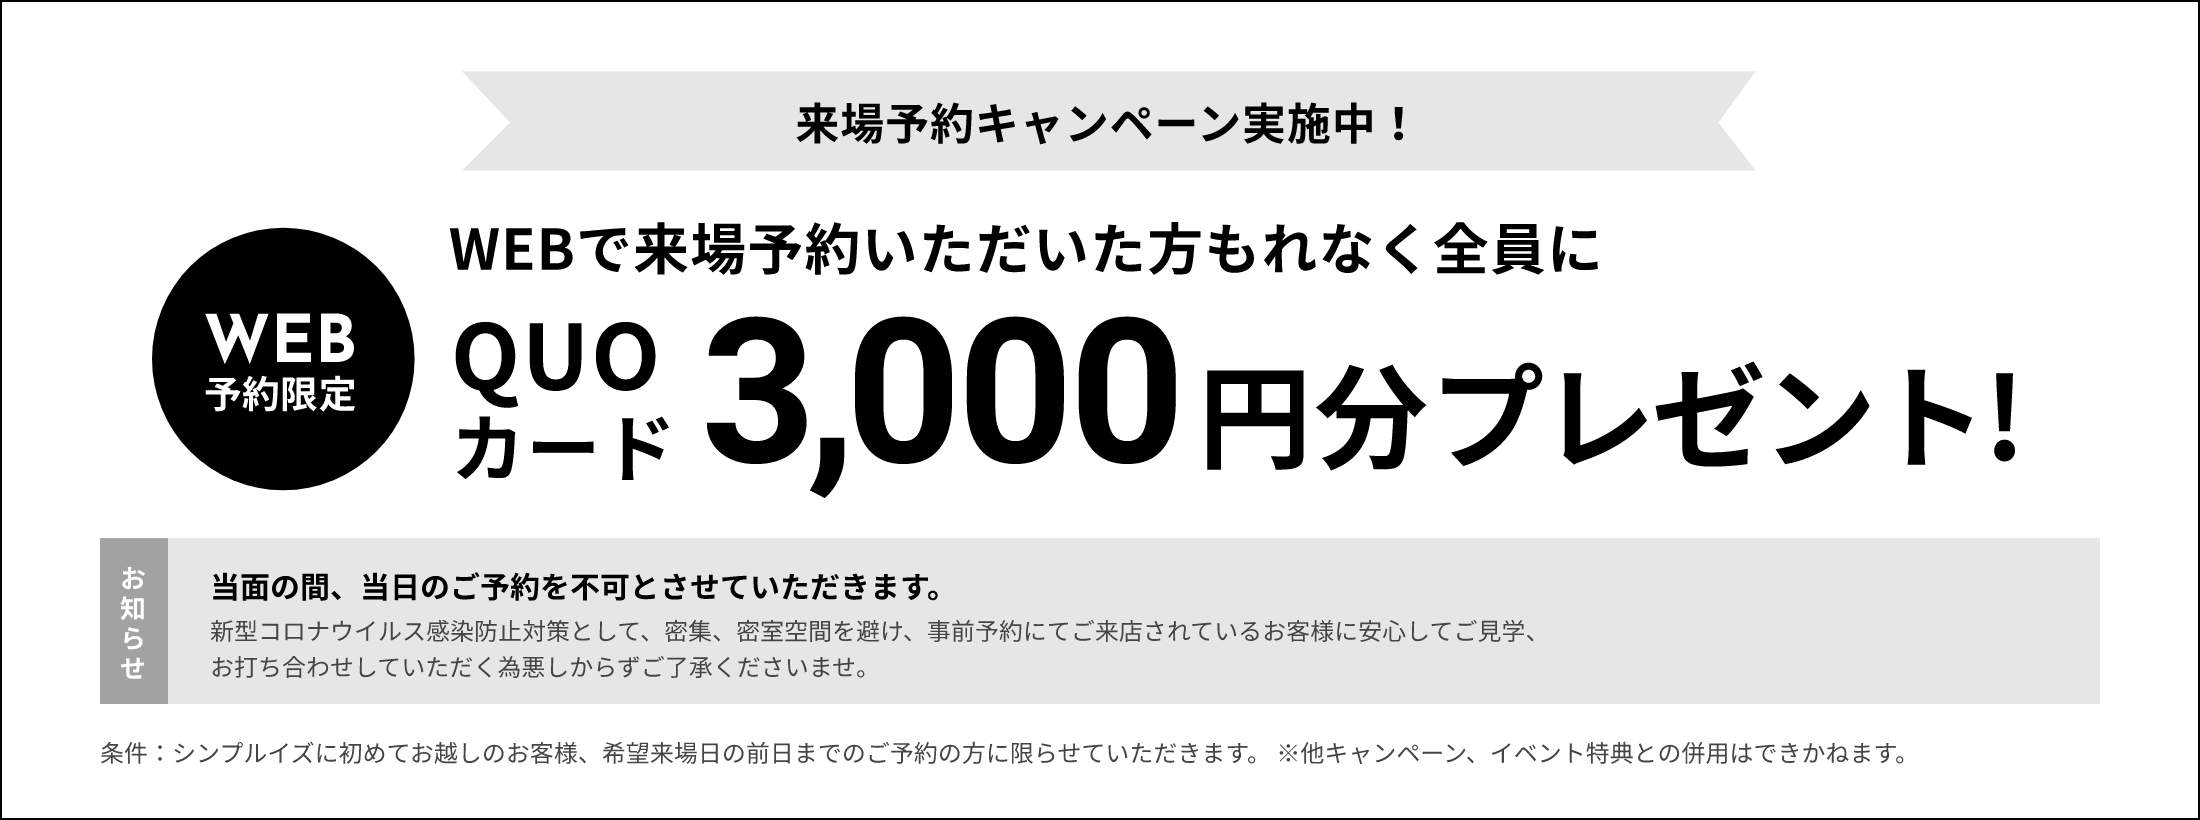 WEB予約限定 QUOカード3,000円分プレゼント!